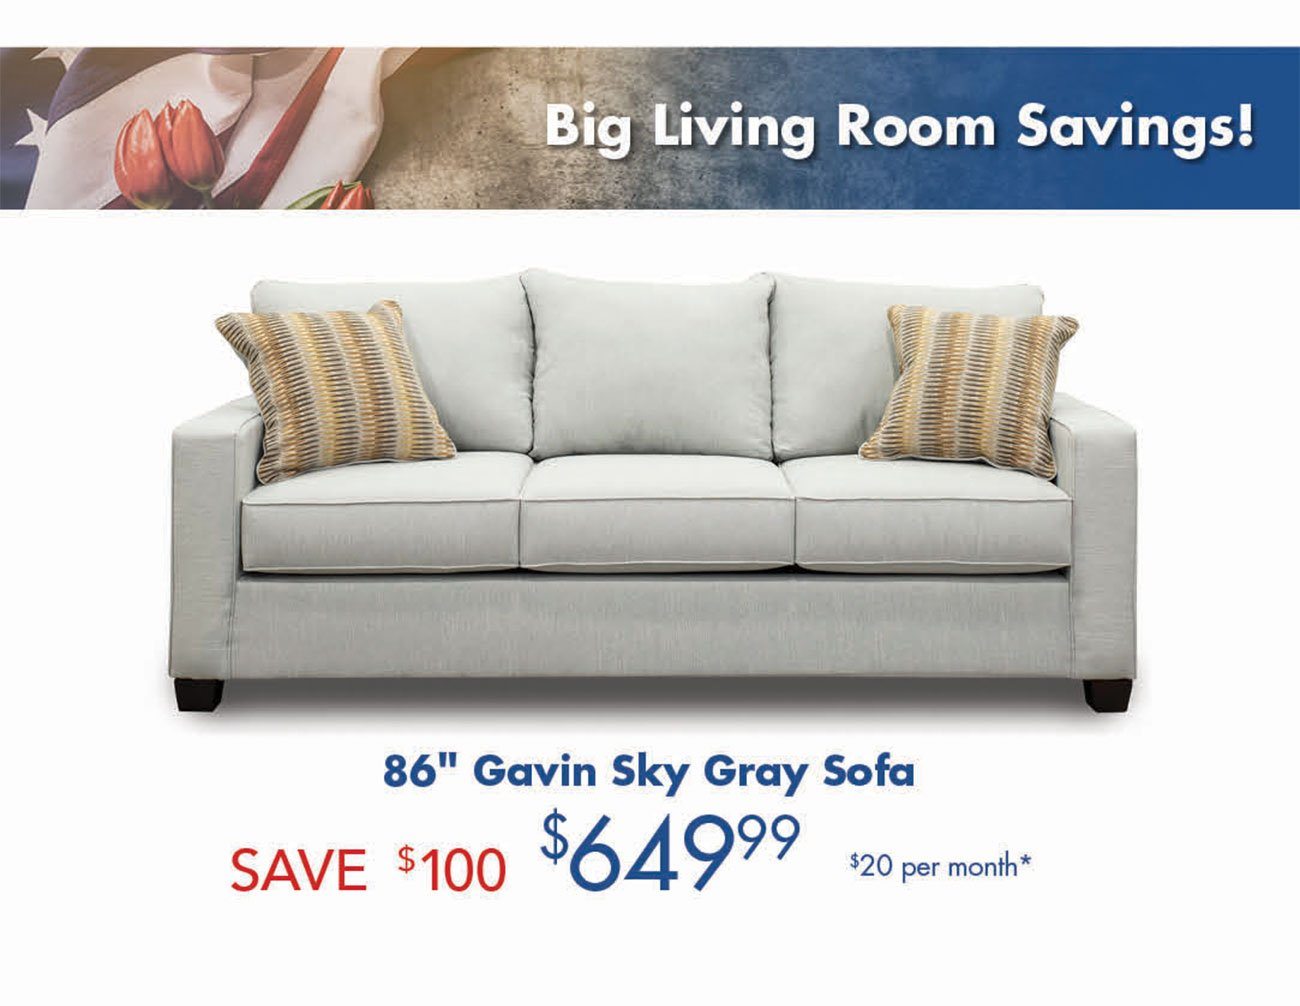 Gavin-Sky-Gray-Sofa